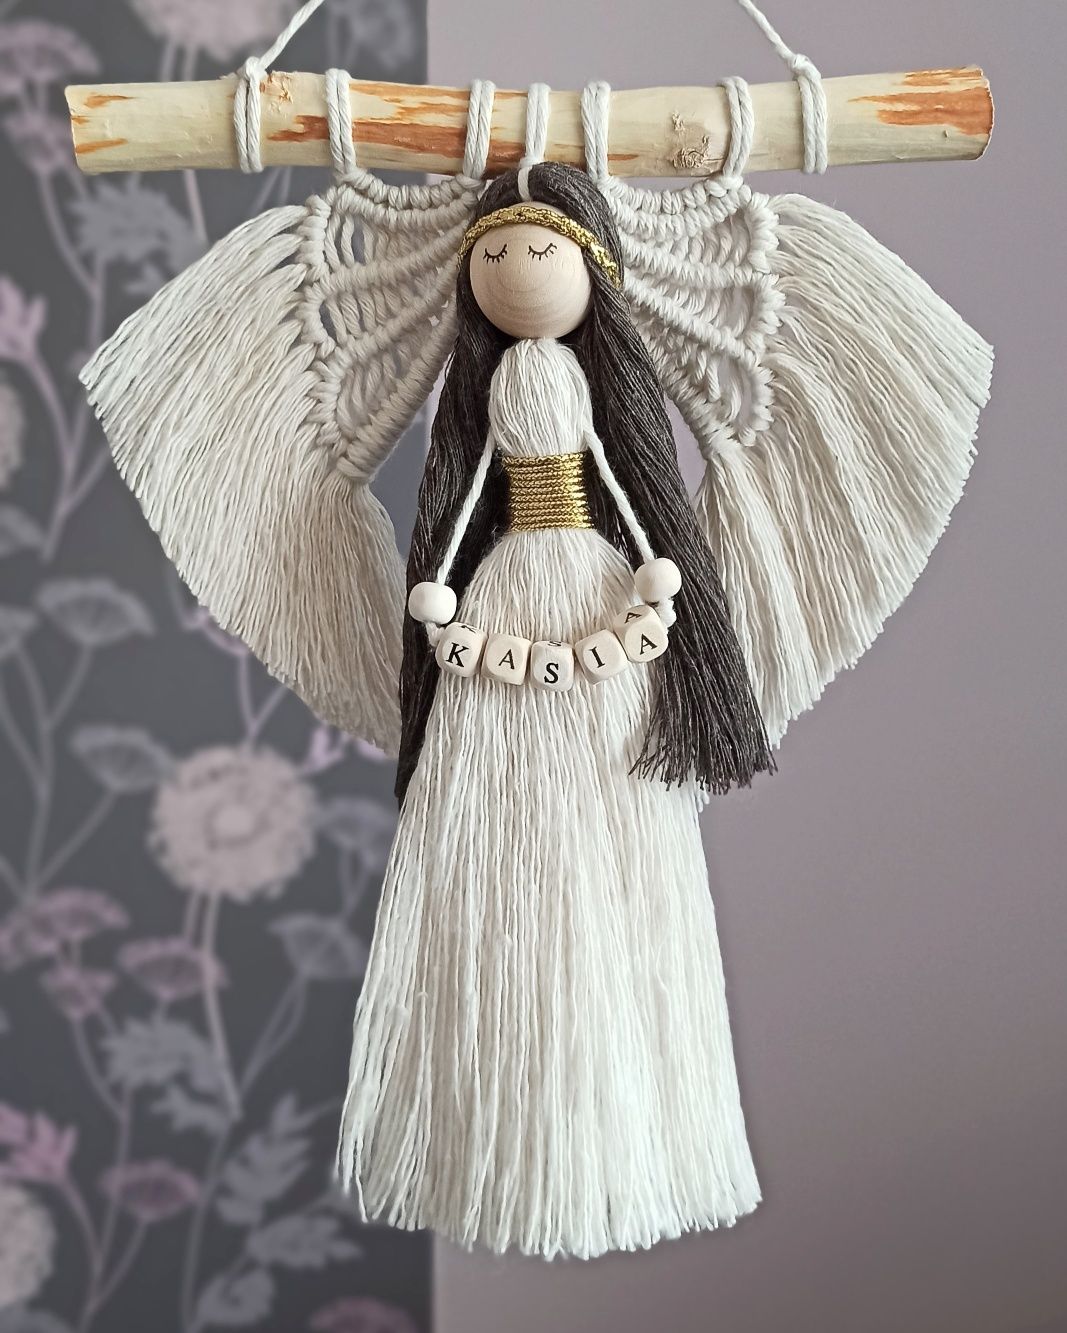 Makrama aniołek, anioł stróż - prezent na komunię, chrzest